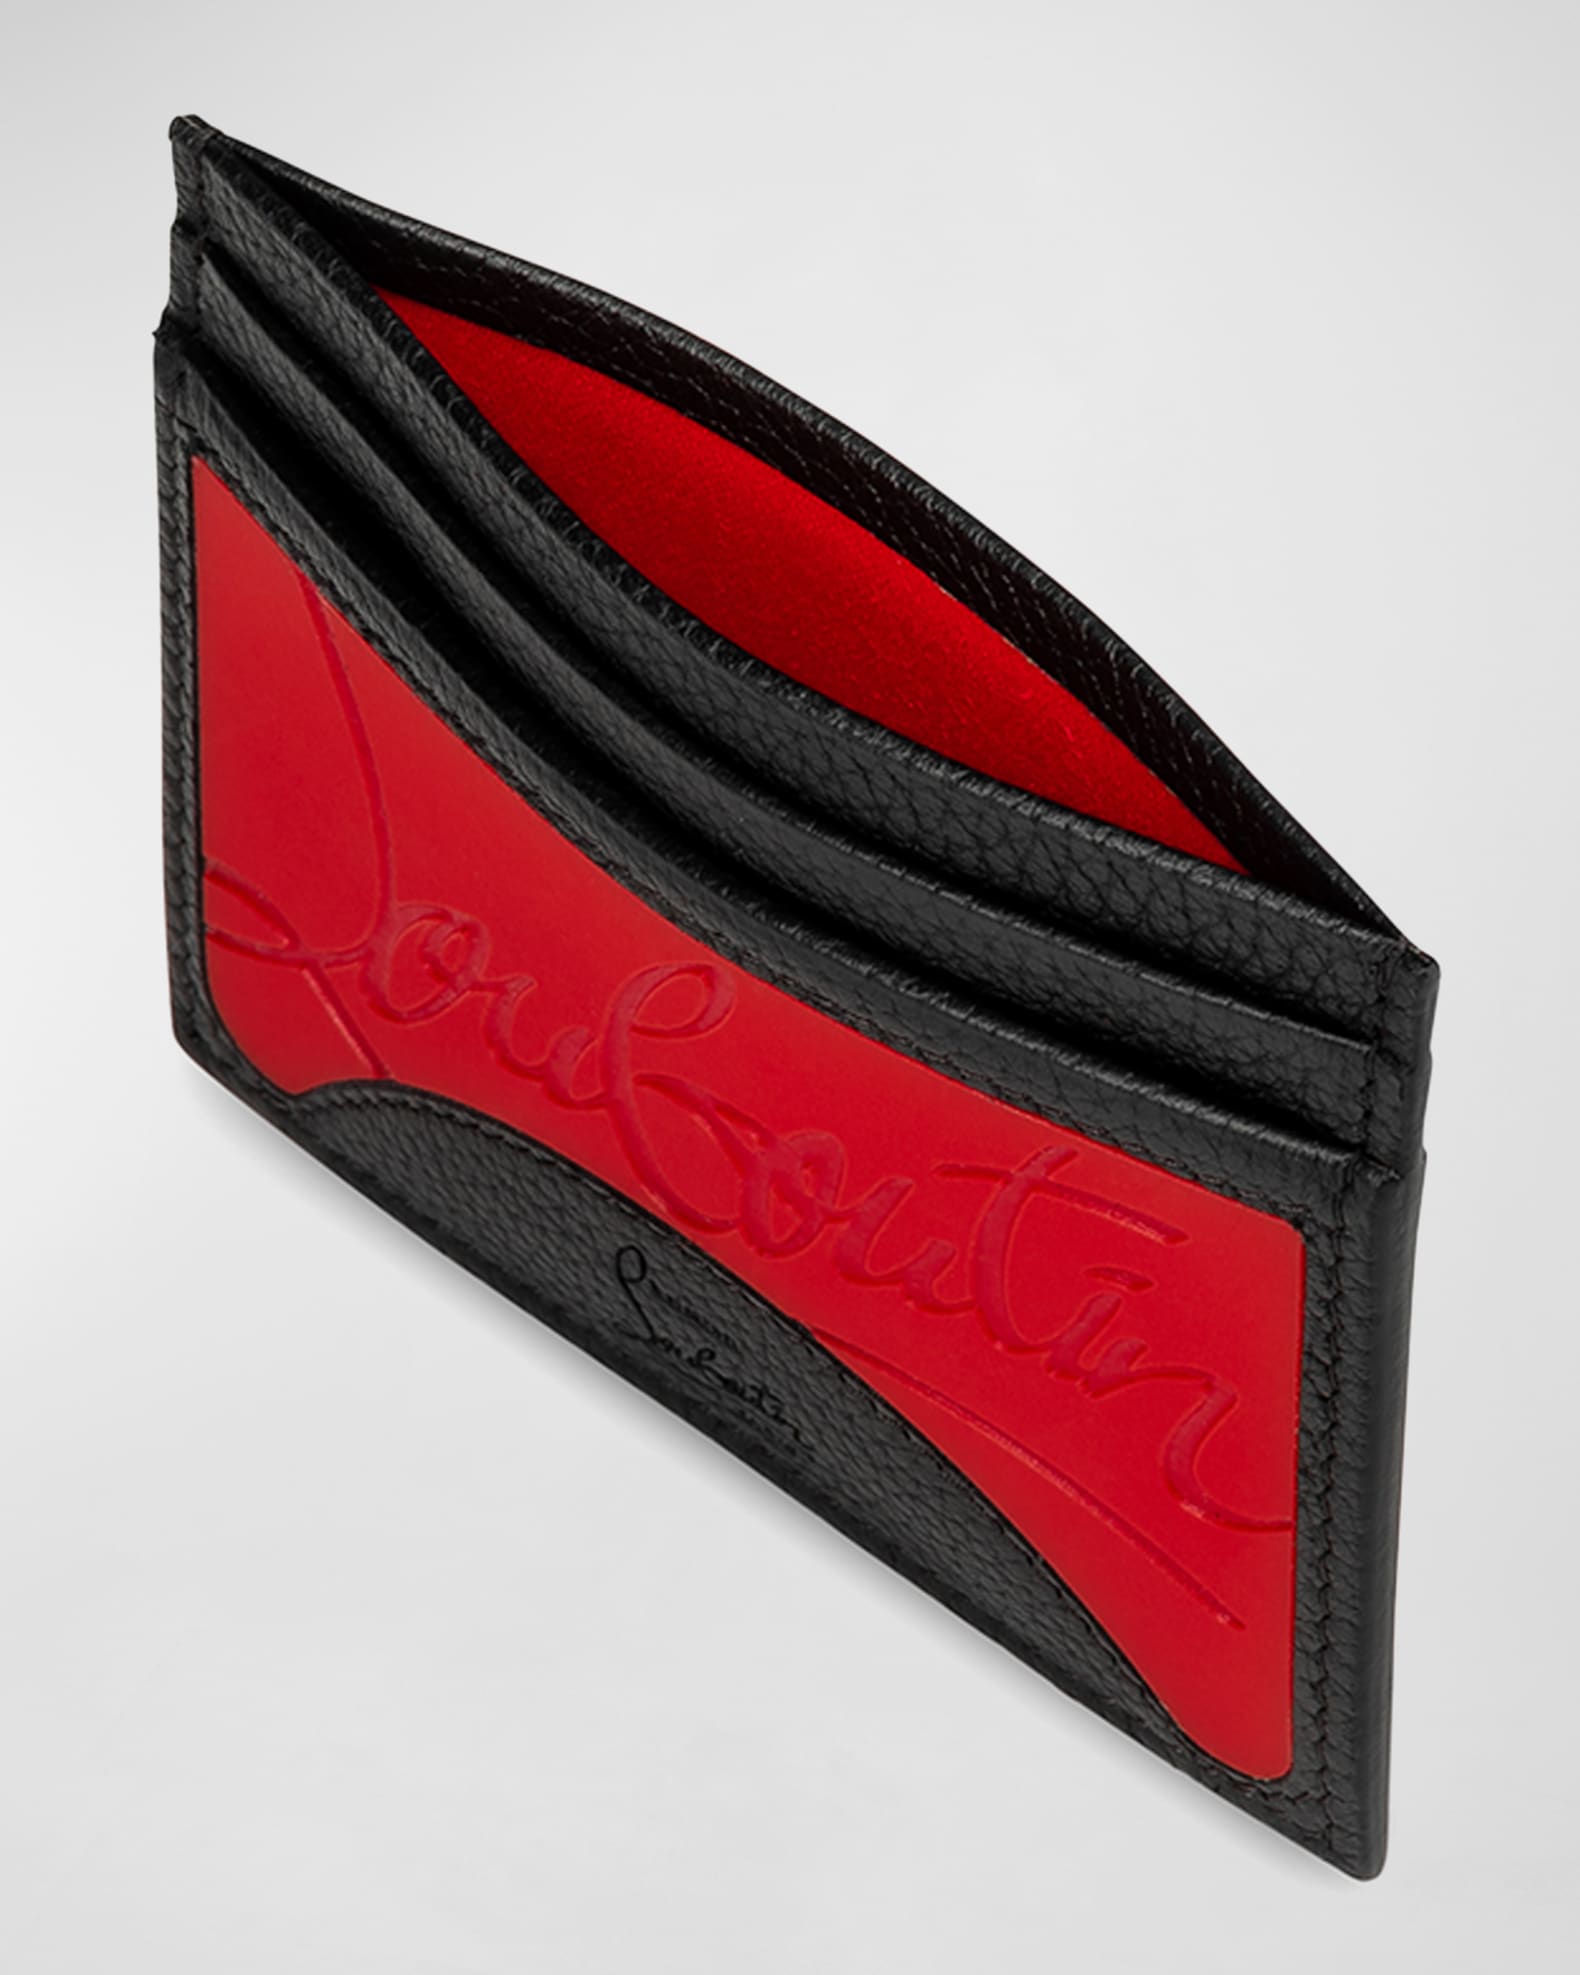 Christian Louboutin Men's Kios Red Sole Empire Card Case | Neiman Marcus